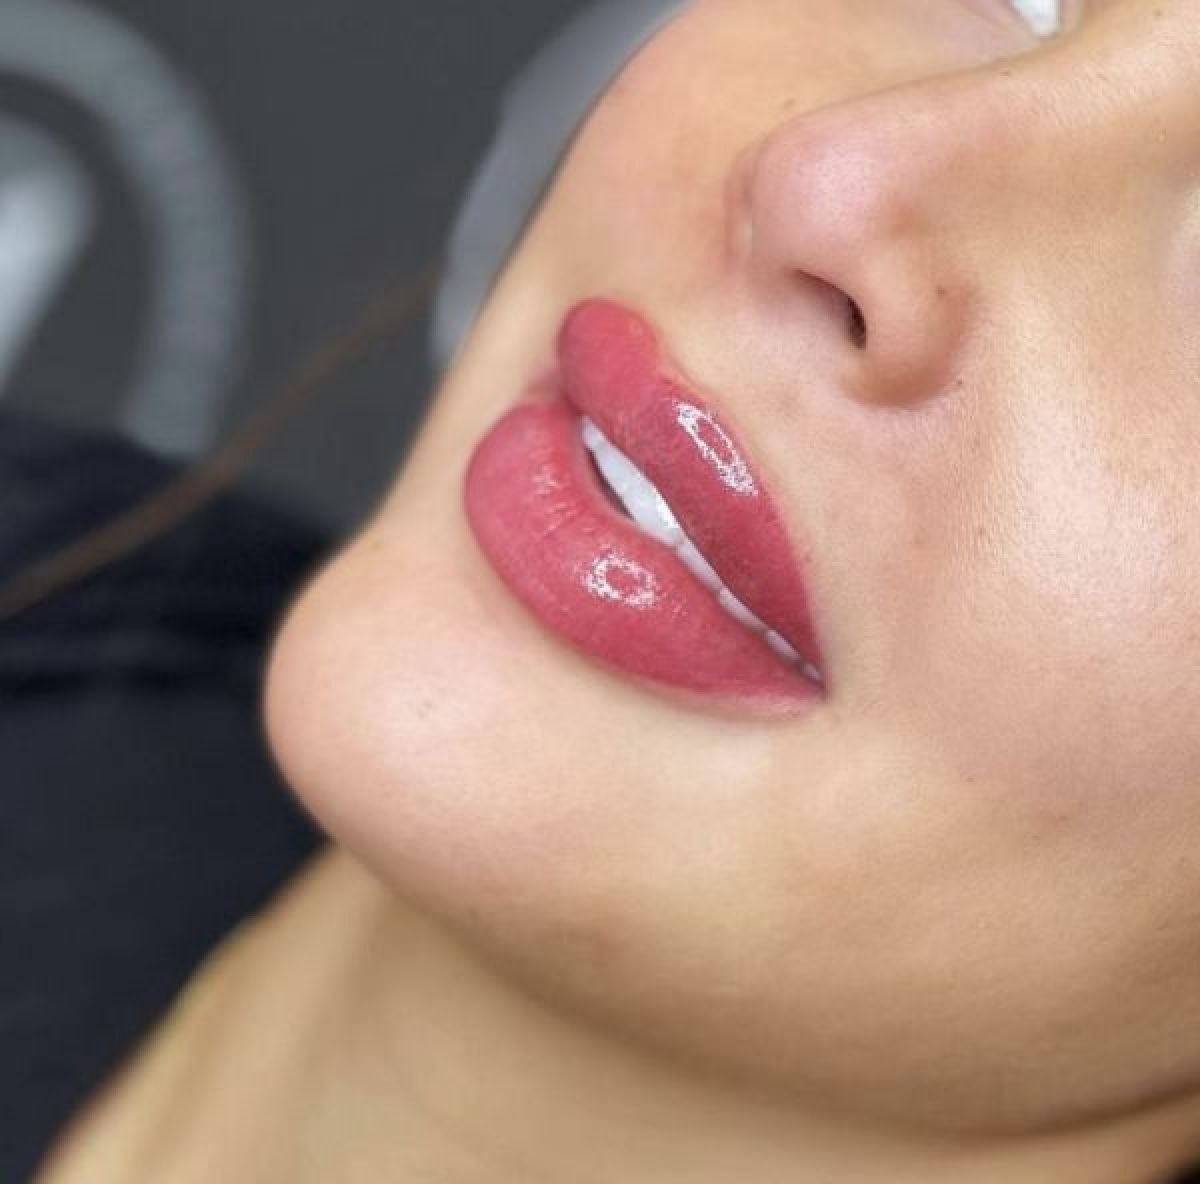 Candy Lips / Maquillage permanent  à Wattrelos (59) Par Donya - Estheca